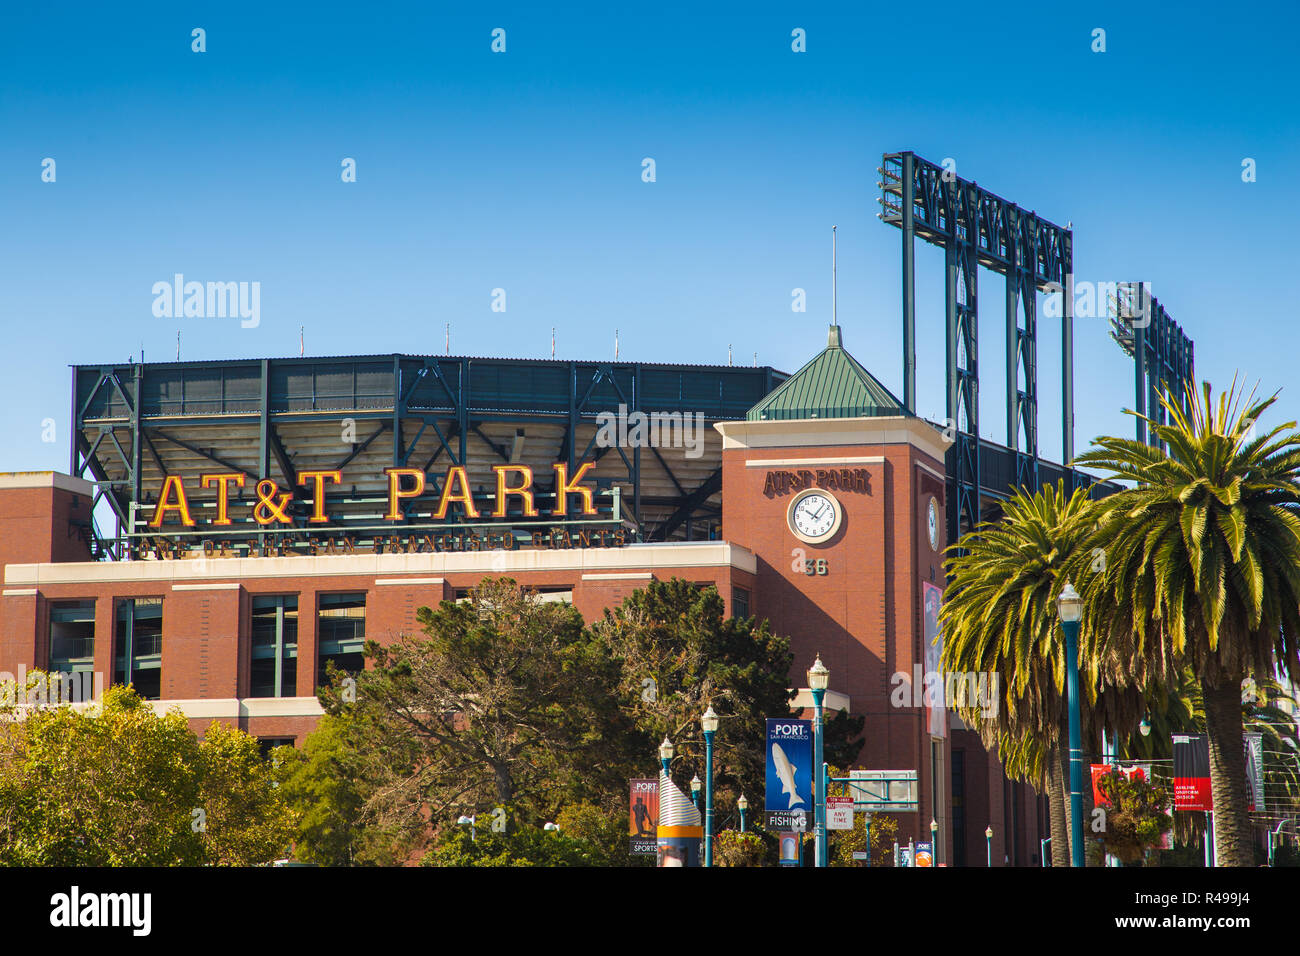 Download wallpapers San Francisco Giants flag, MLB, orange black